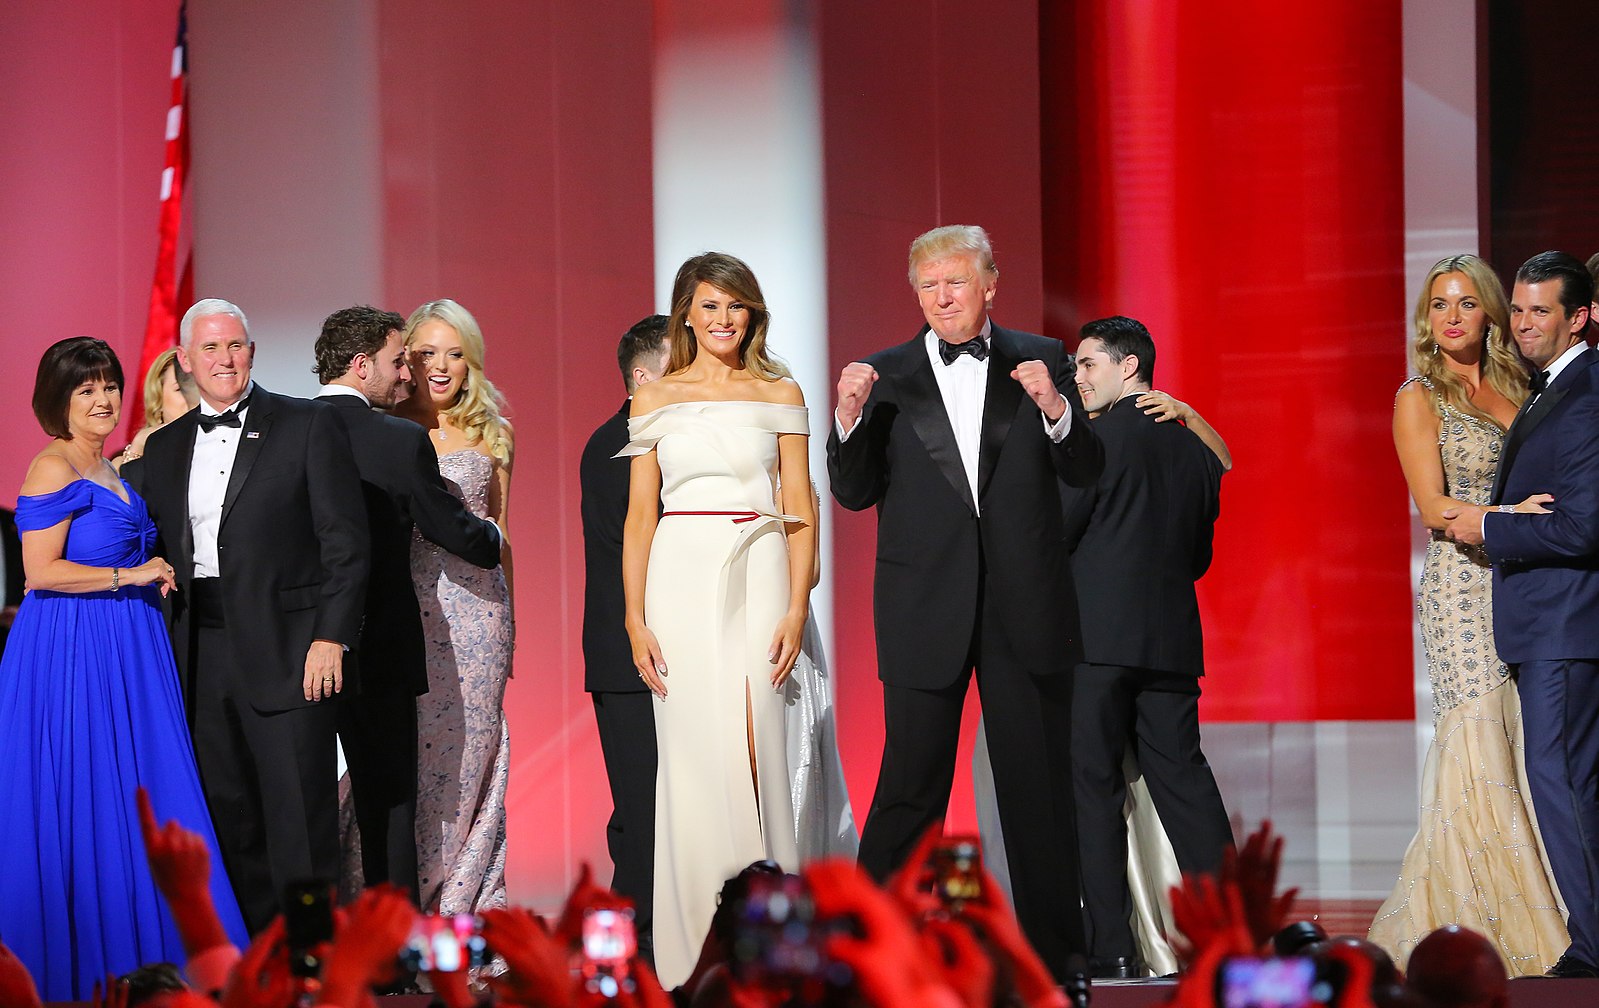 President Trump celebrates his inauguration at the Liberty Ball on January 20, 2017.